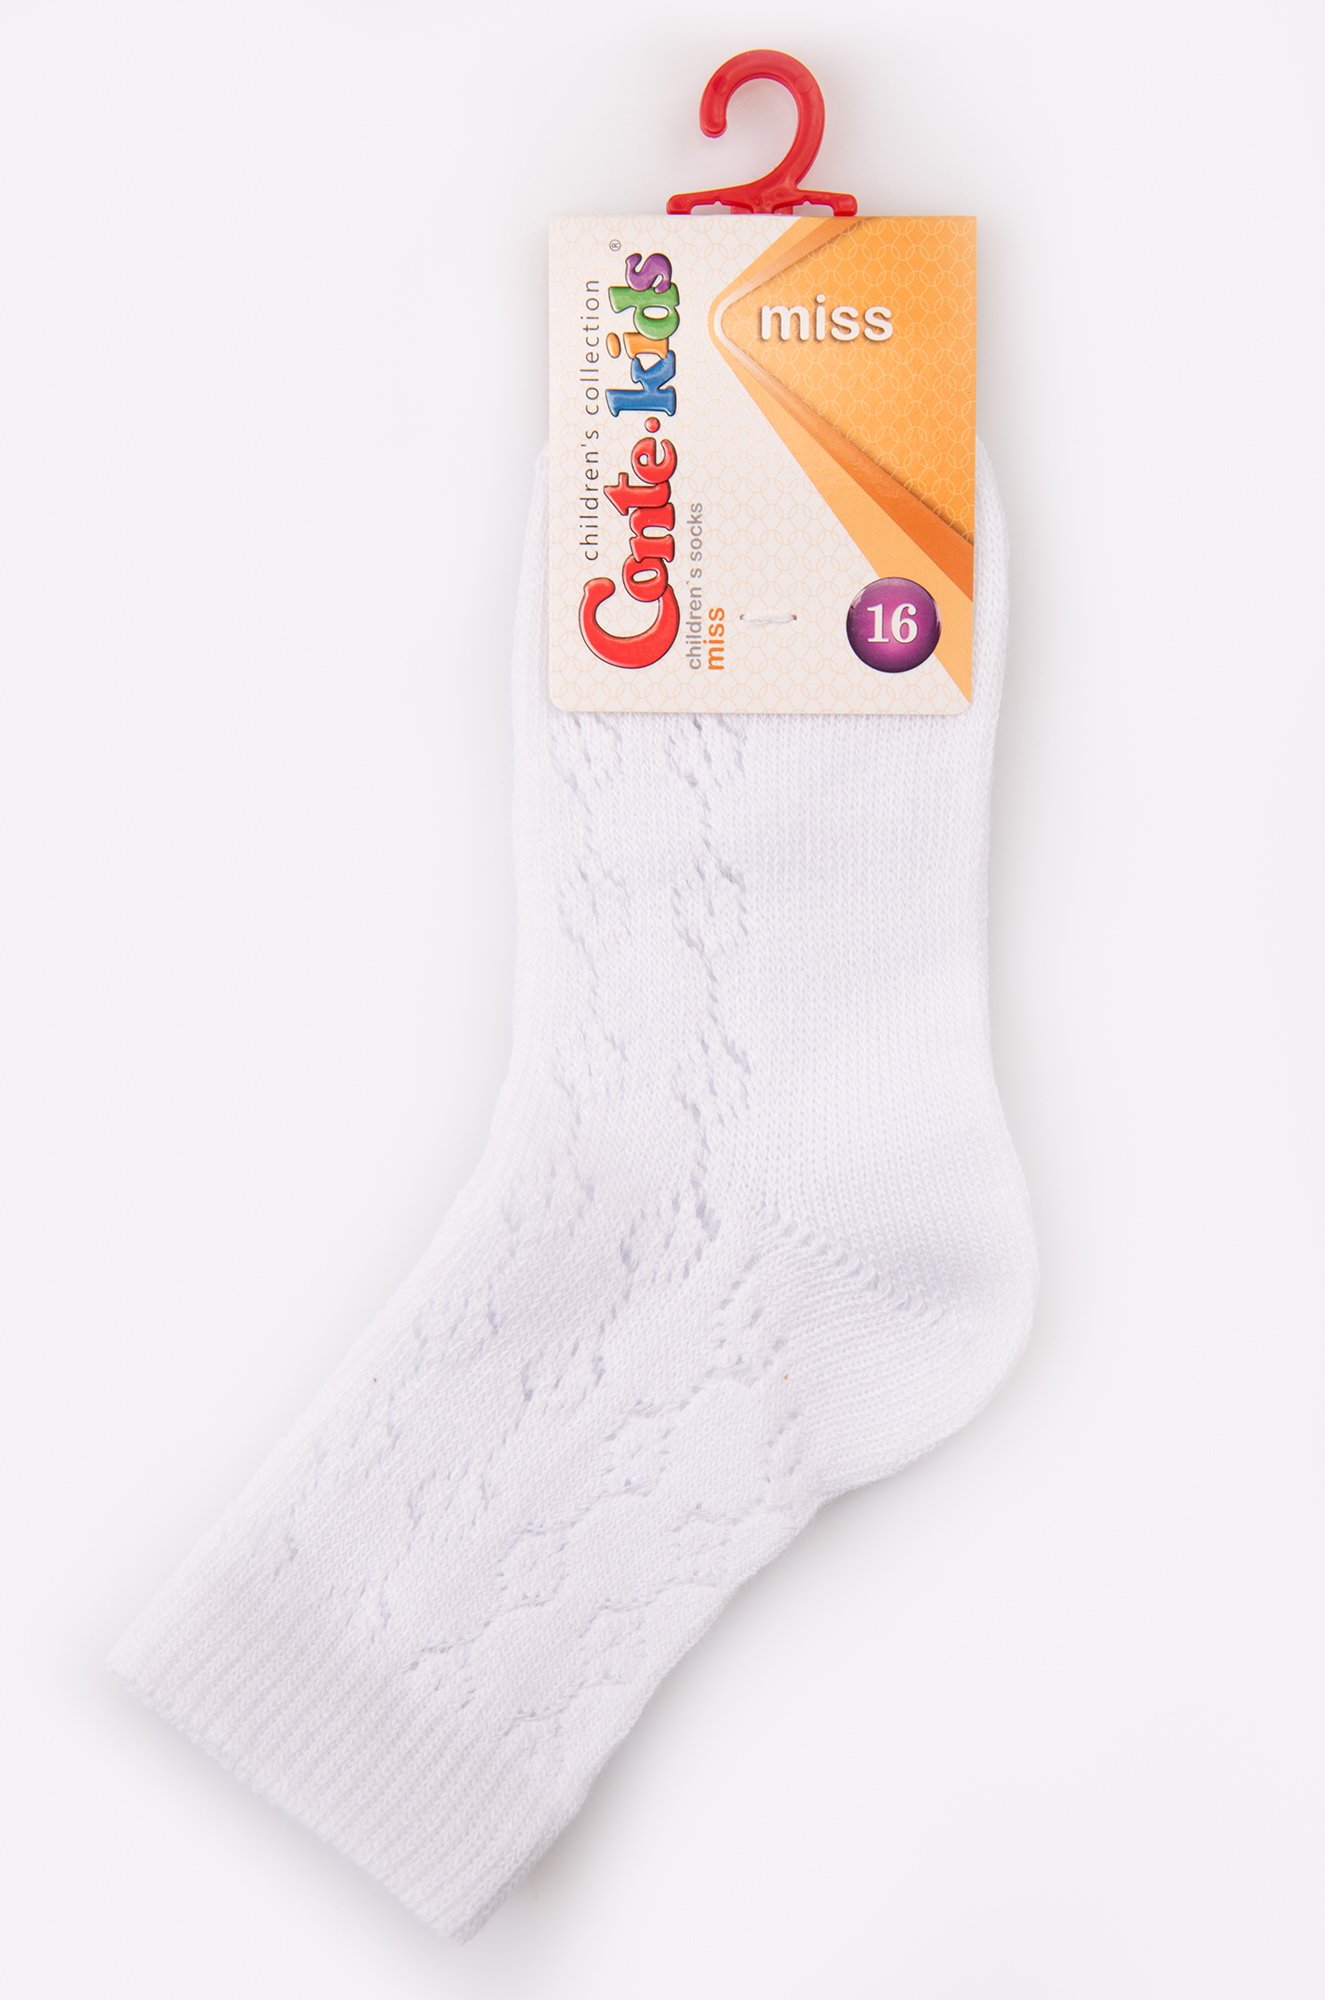 Ажурные носки для девочки Conte-kids